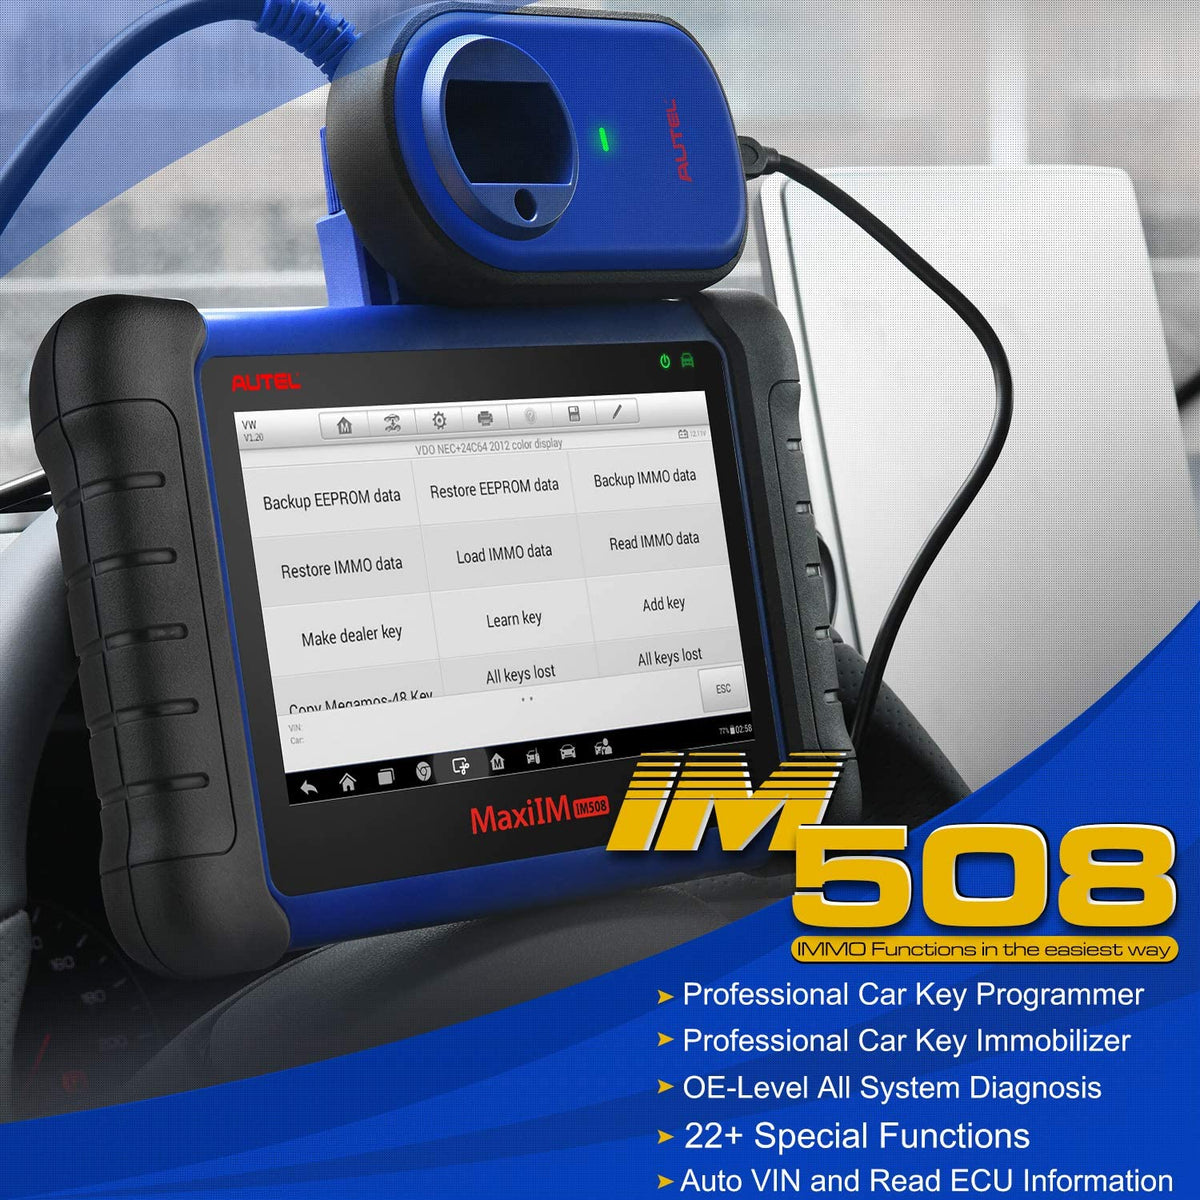 Autel MaxiIM IM508 XP400 PRO Automotive Scanner IMMO Programming Diagnostic  Tool autel maxiim im508 key programming – VXDAS Official Store